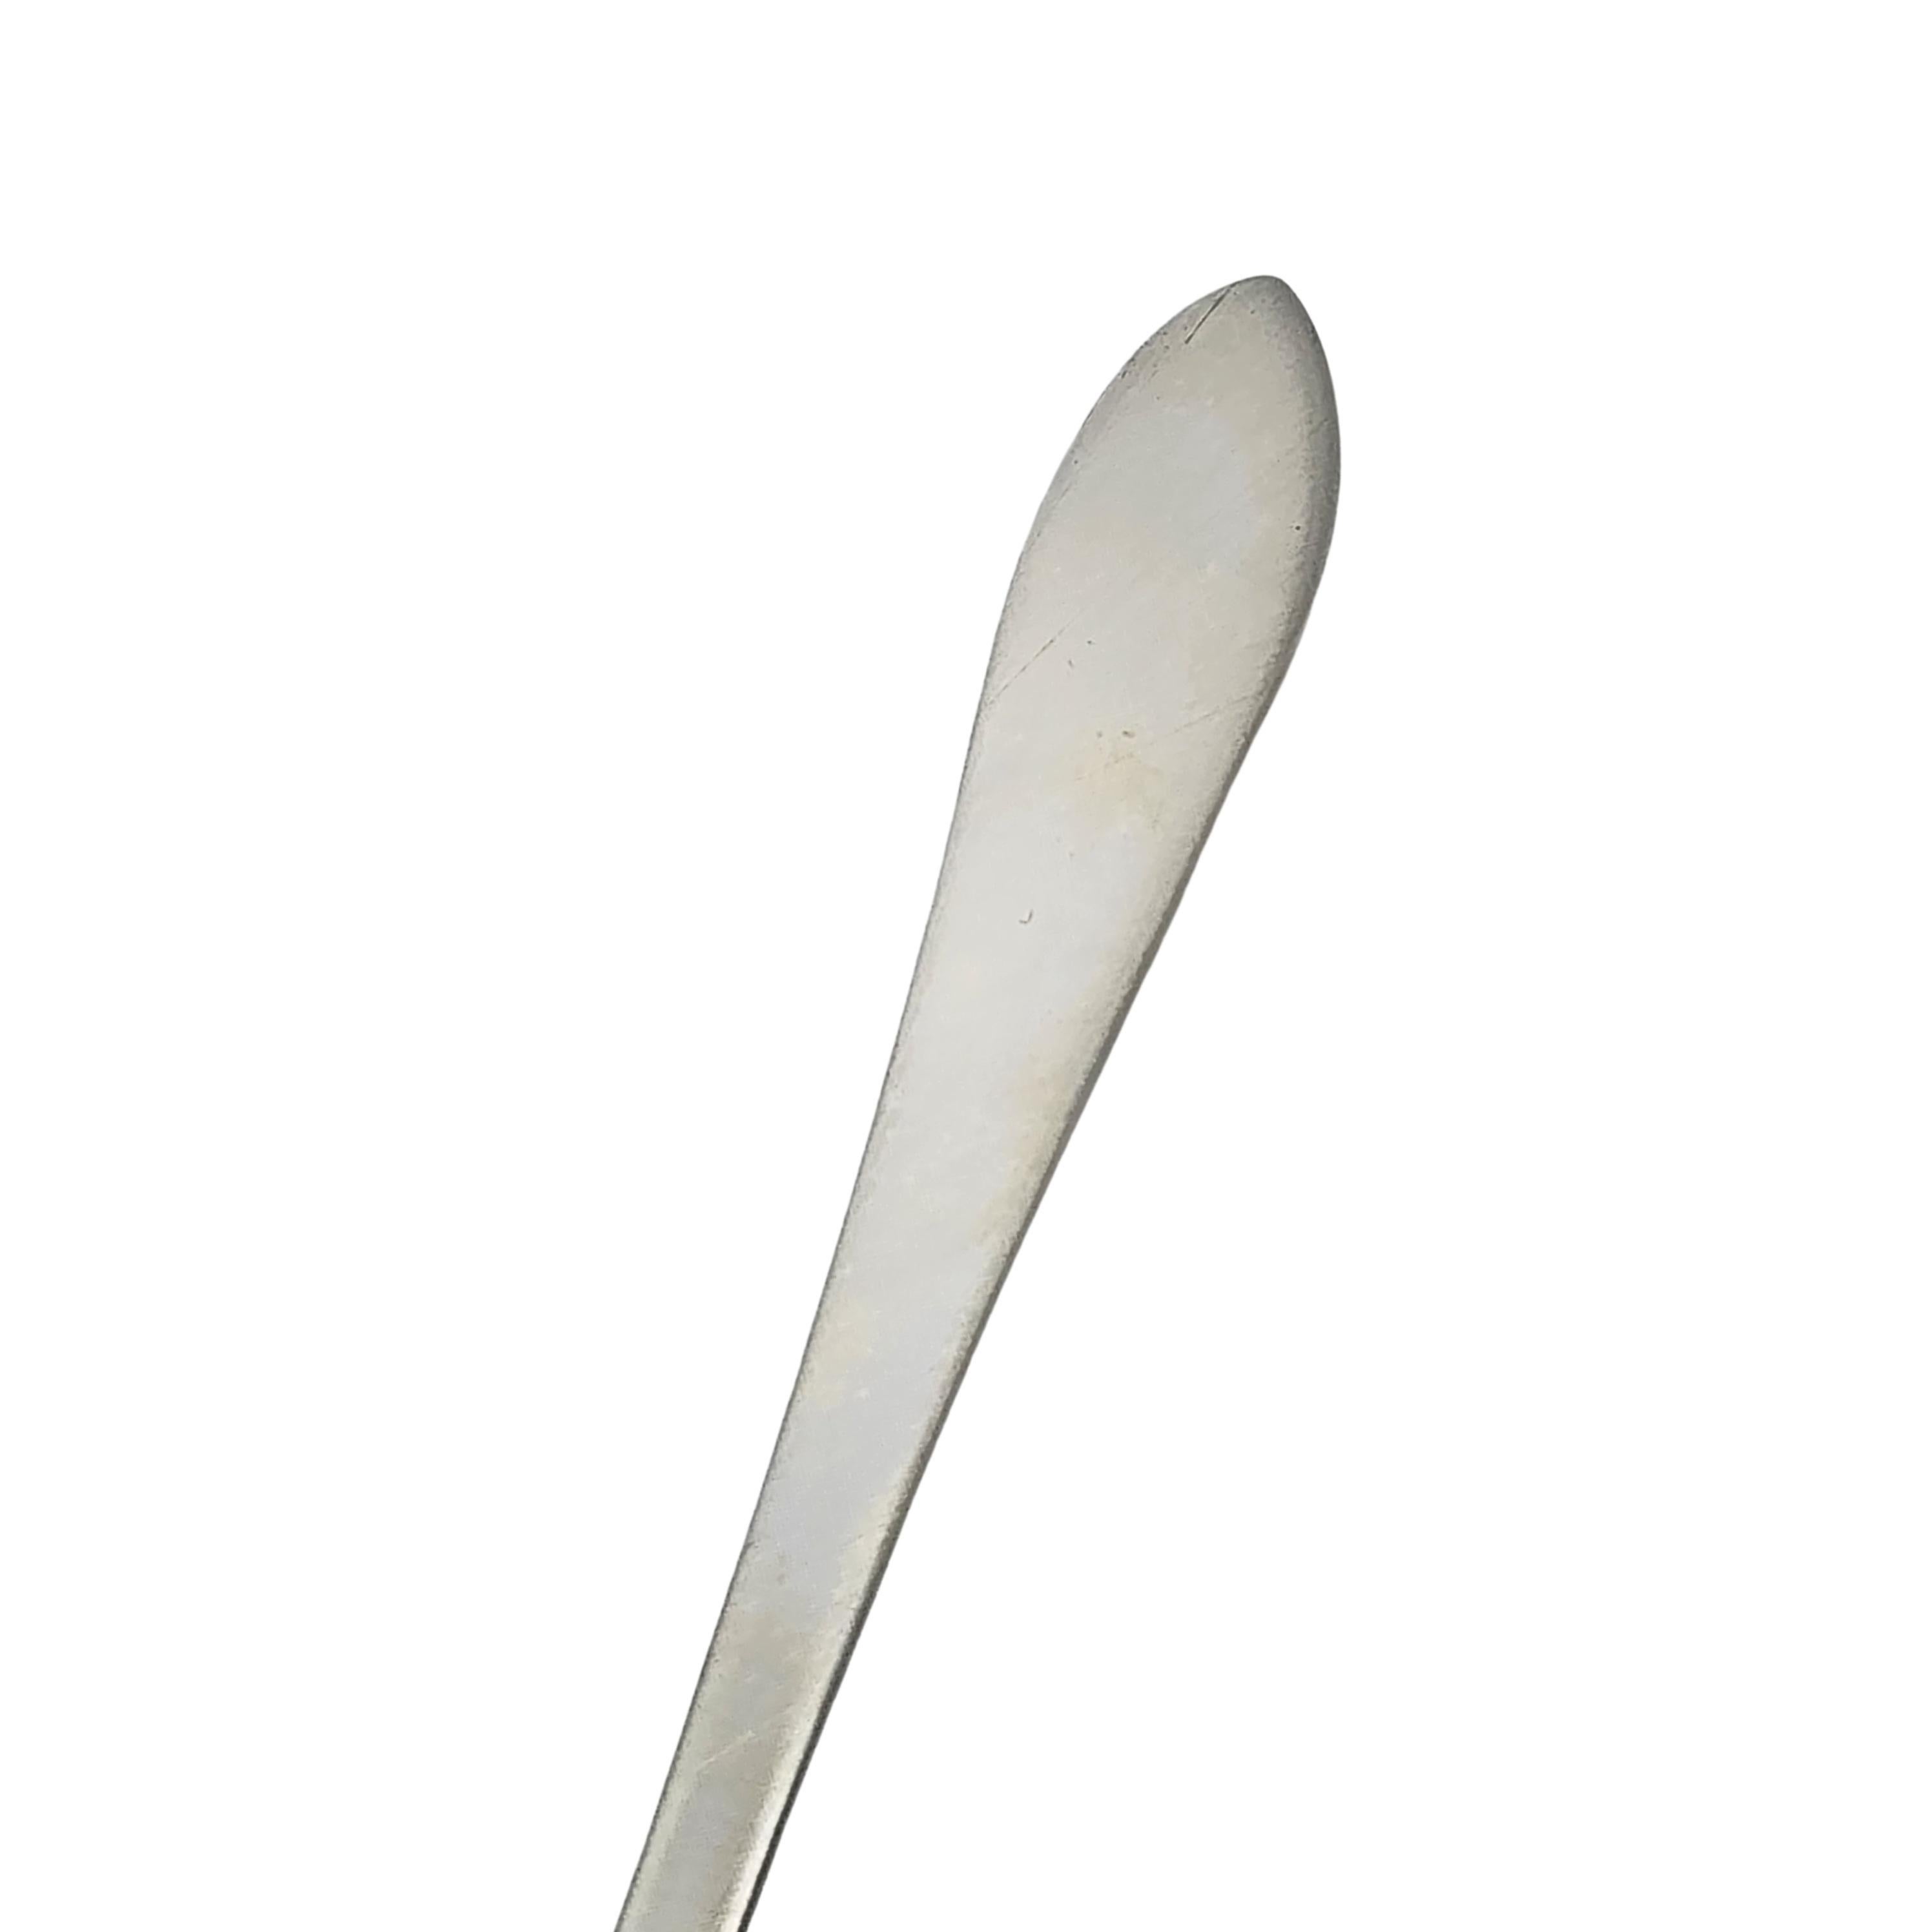 Tiffany & Co Faneuil Sterling Silver Baby Feeding Spoon #15489 1